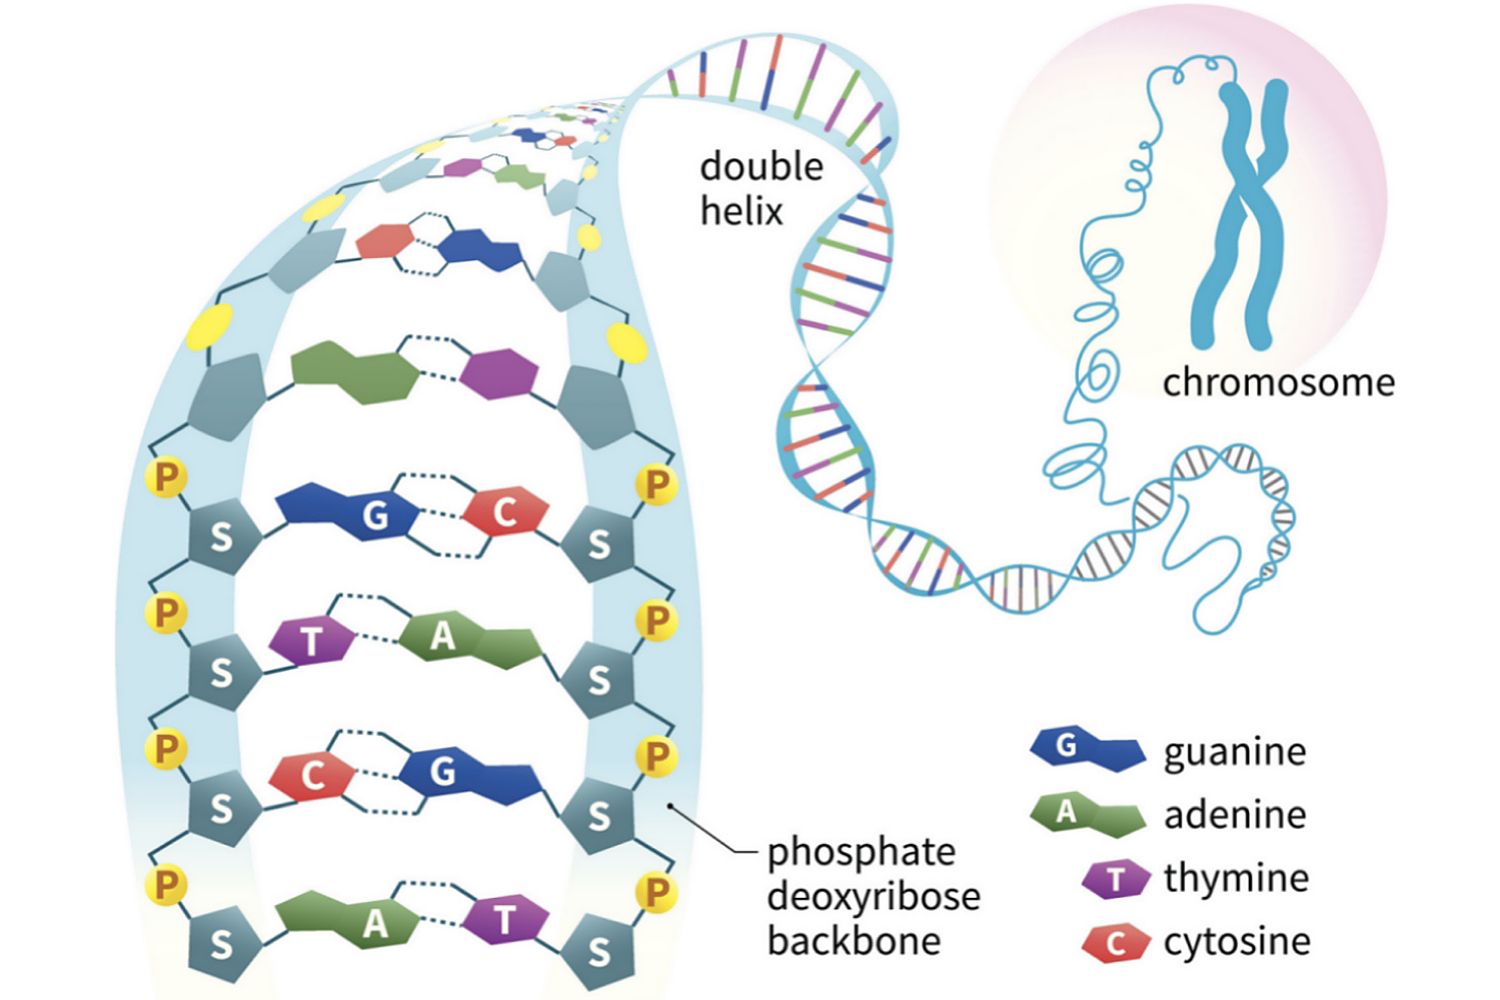 sugar phosphate backbone chromosome